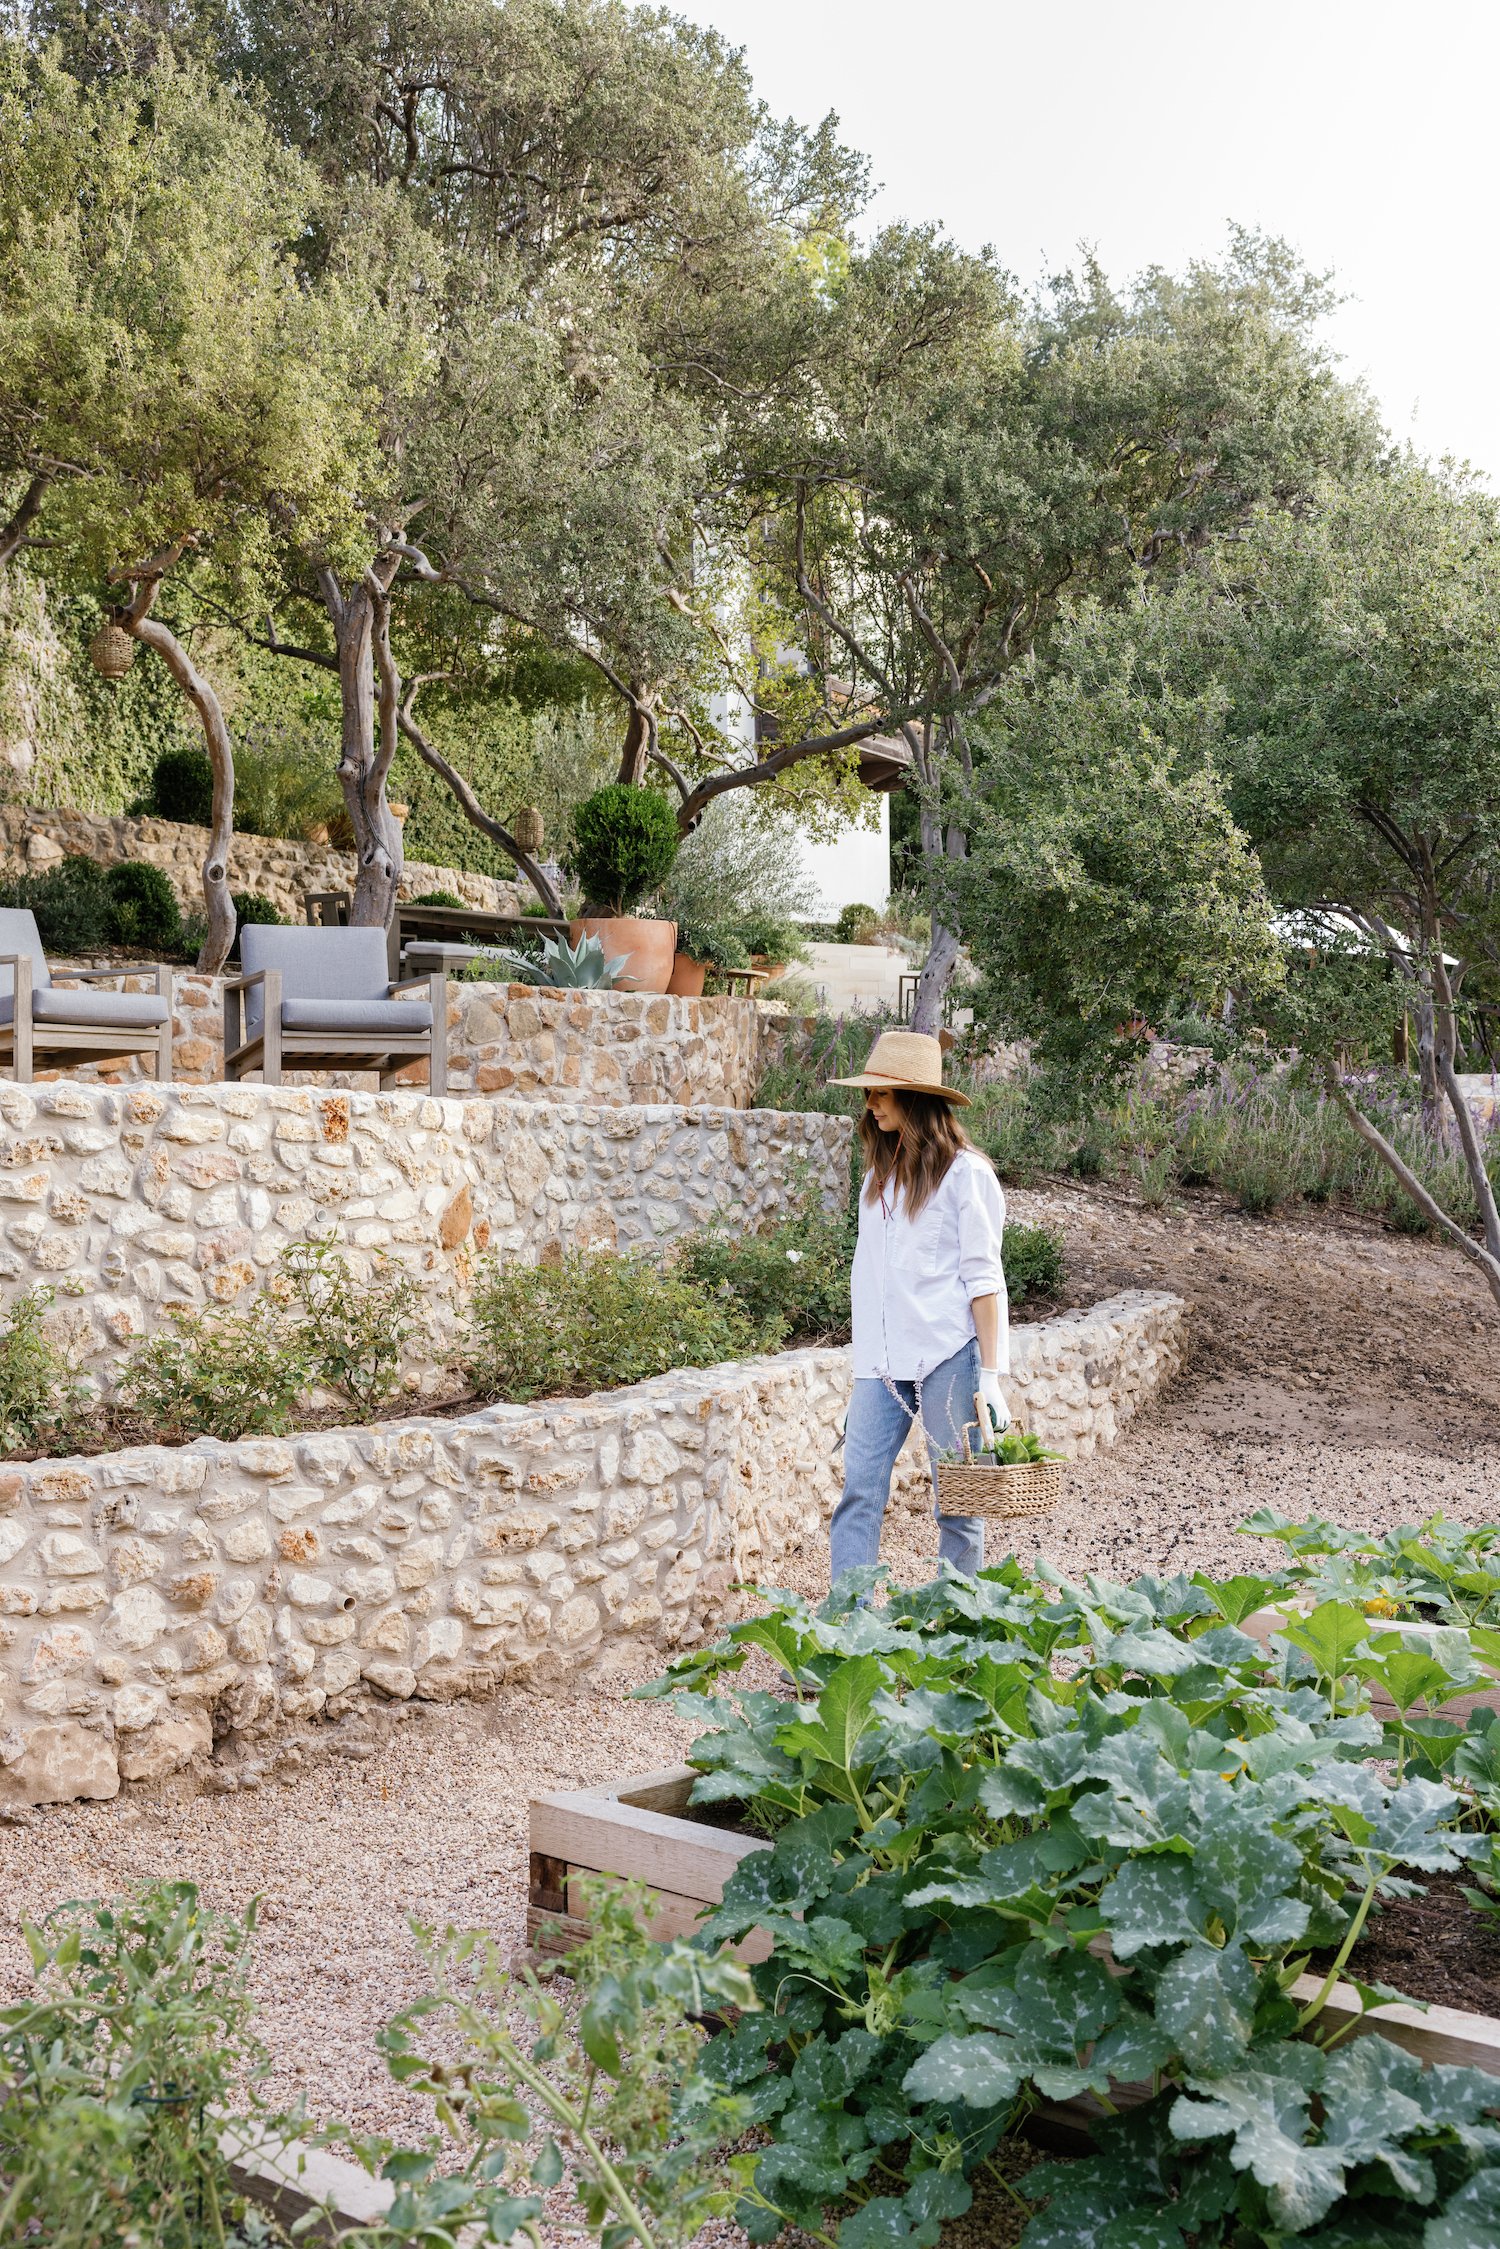 camille styles backyard - how to build raised garden beds - vegetable garden